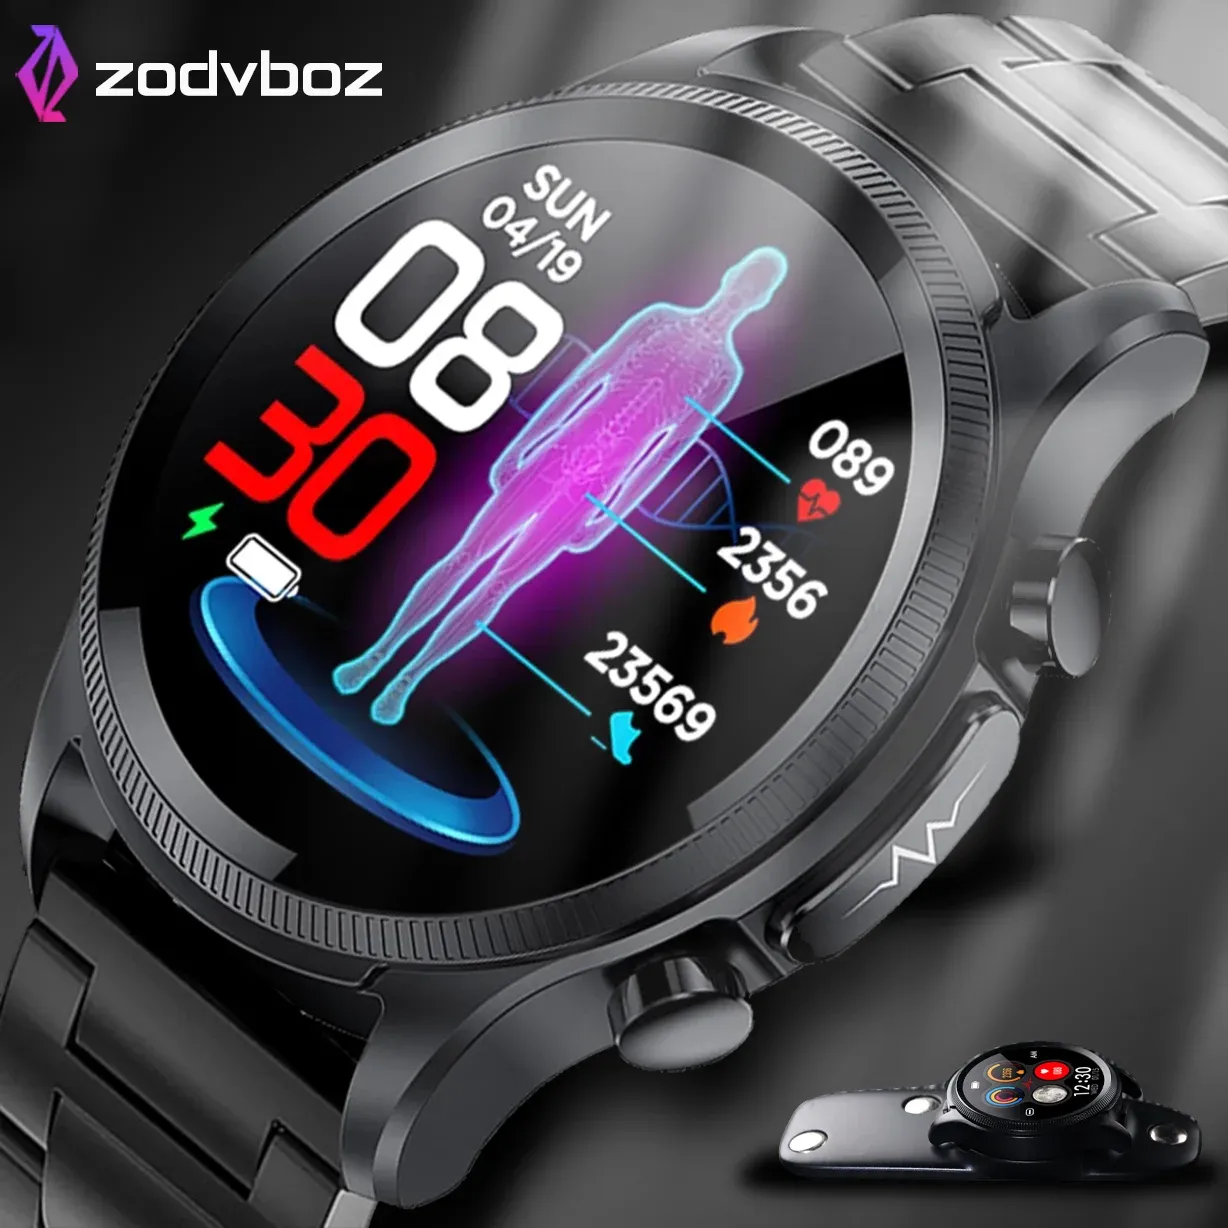 Zegarki Zodvboz Ecg Smart Watch Men Laser Tempert